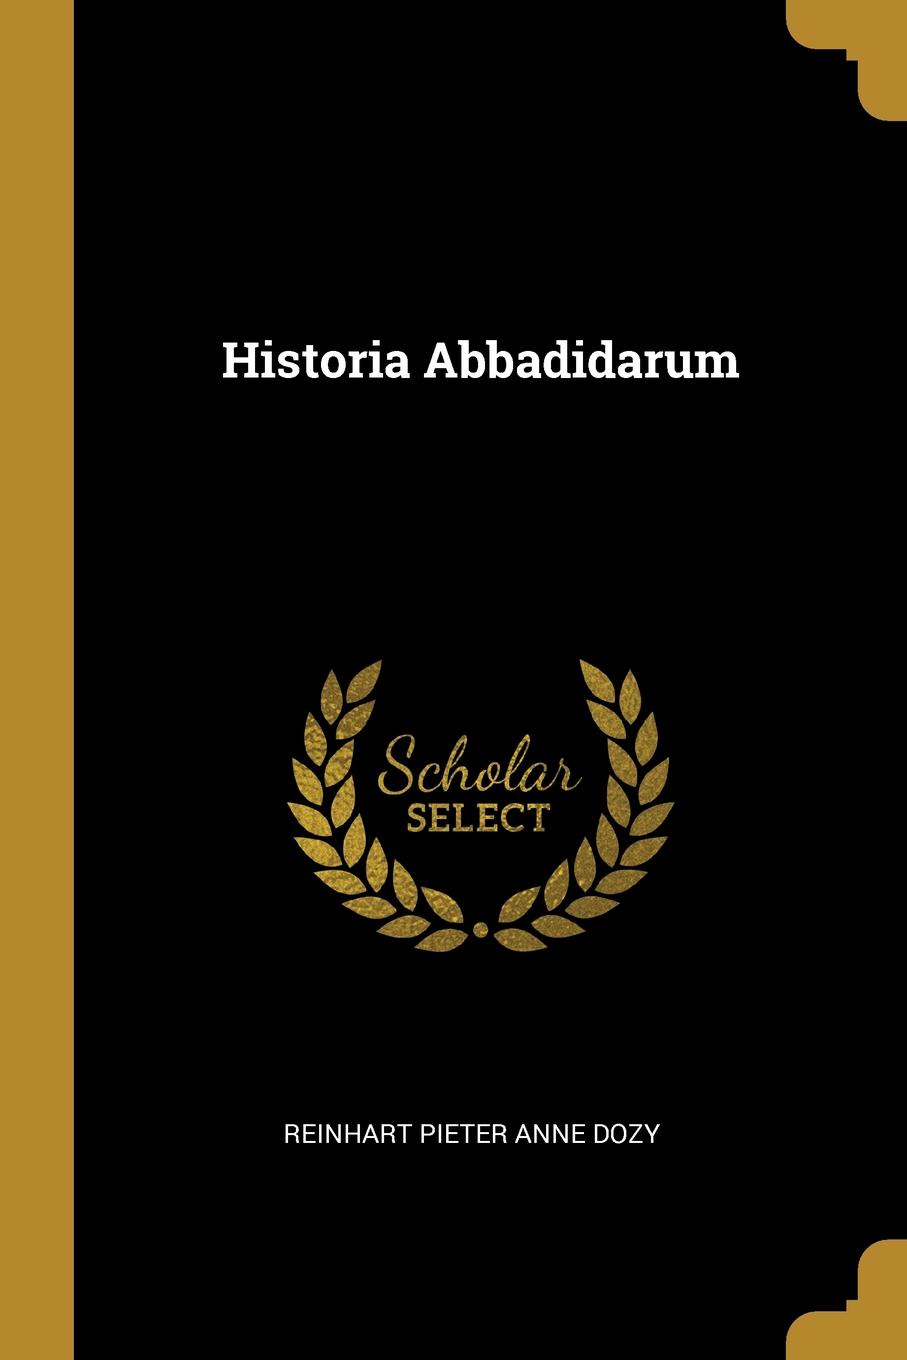 Historia Abbadidarum